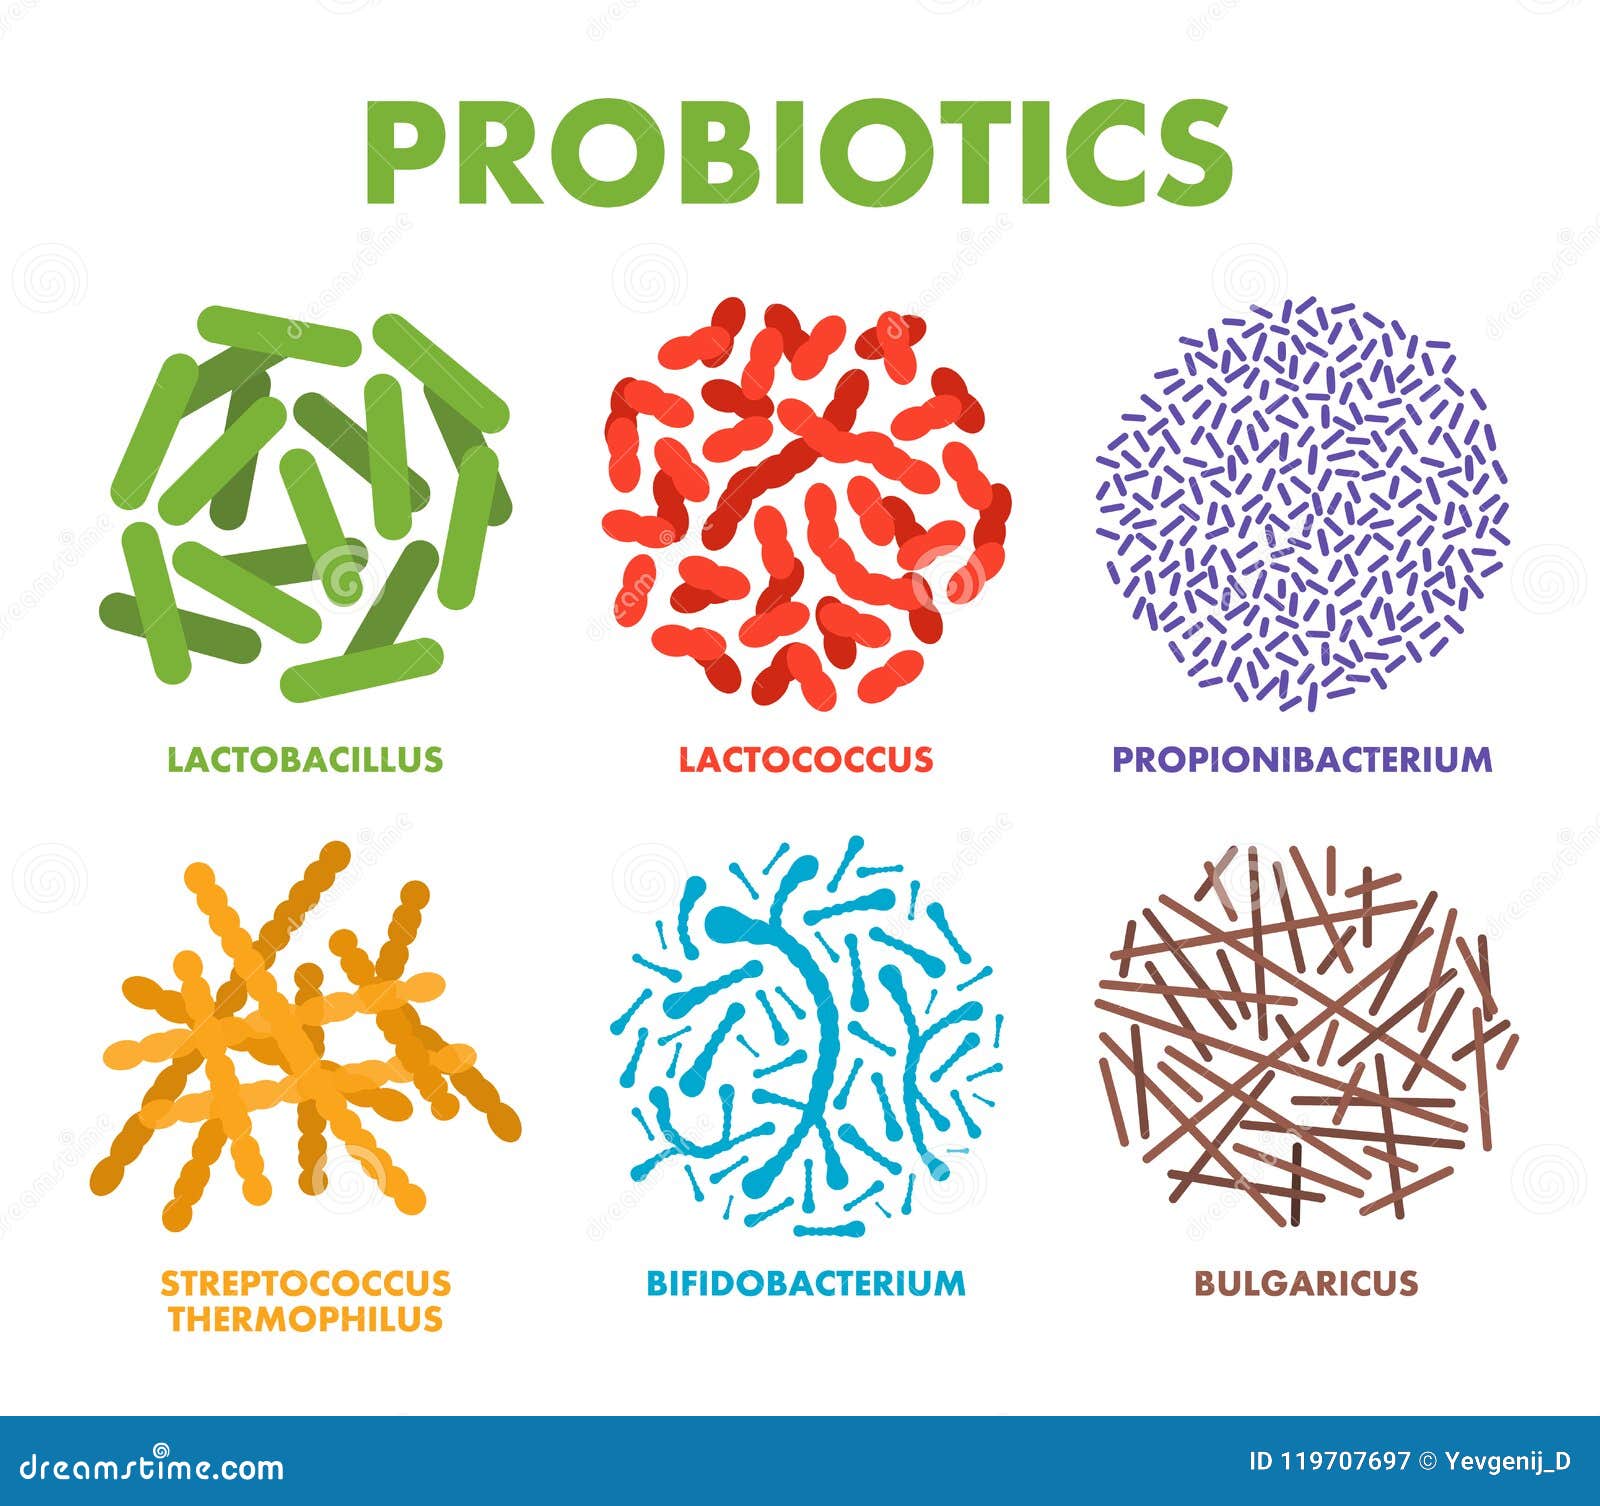 probiotics. good bacteria and microorganisms for human health. microscopic probiotics, good bacterial flora